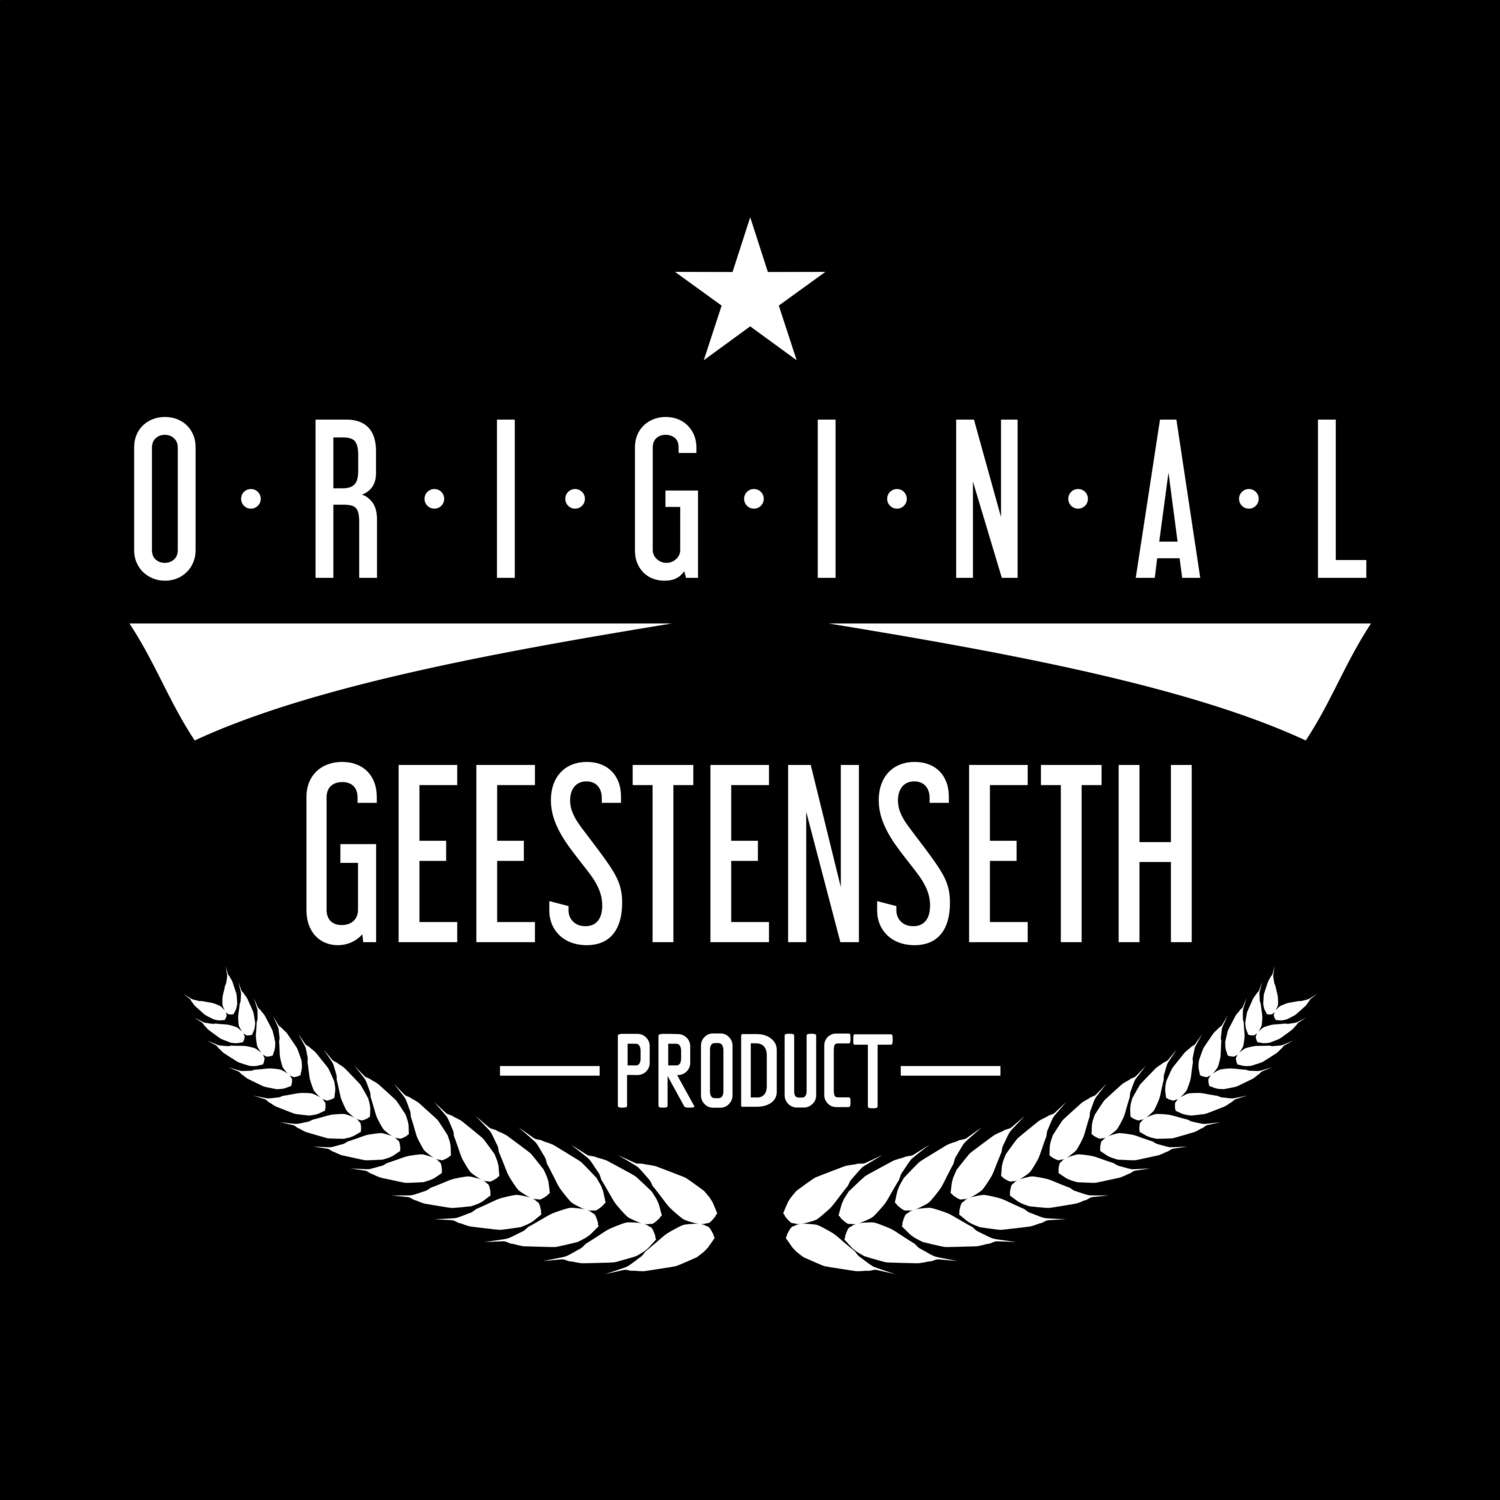 Geestenseth T-Shirt »Original Product«